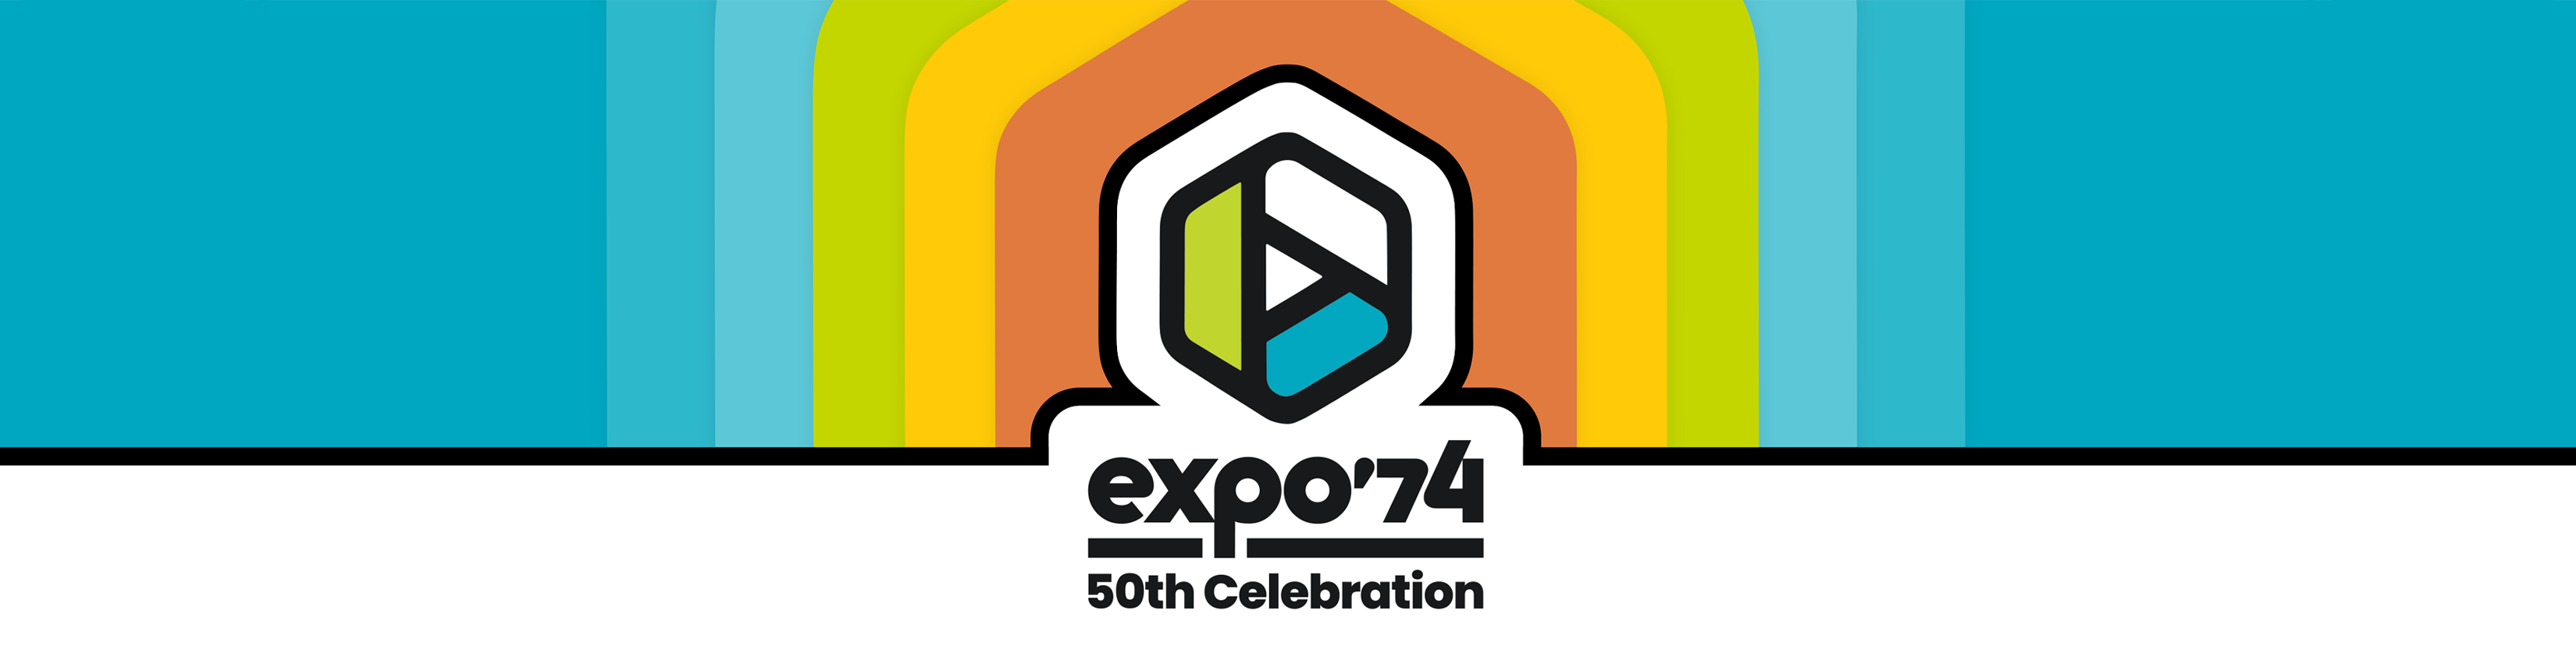 Expo '74 50th Celebration Header Image'